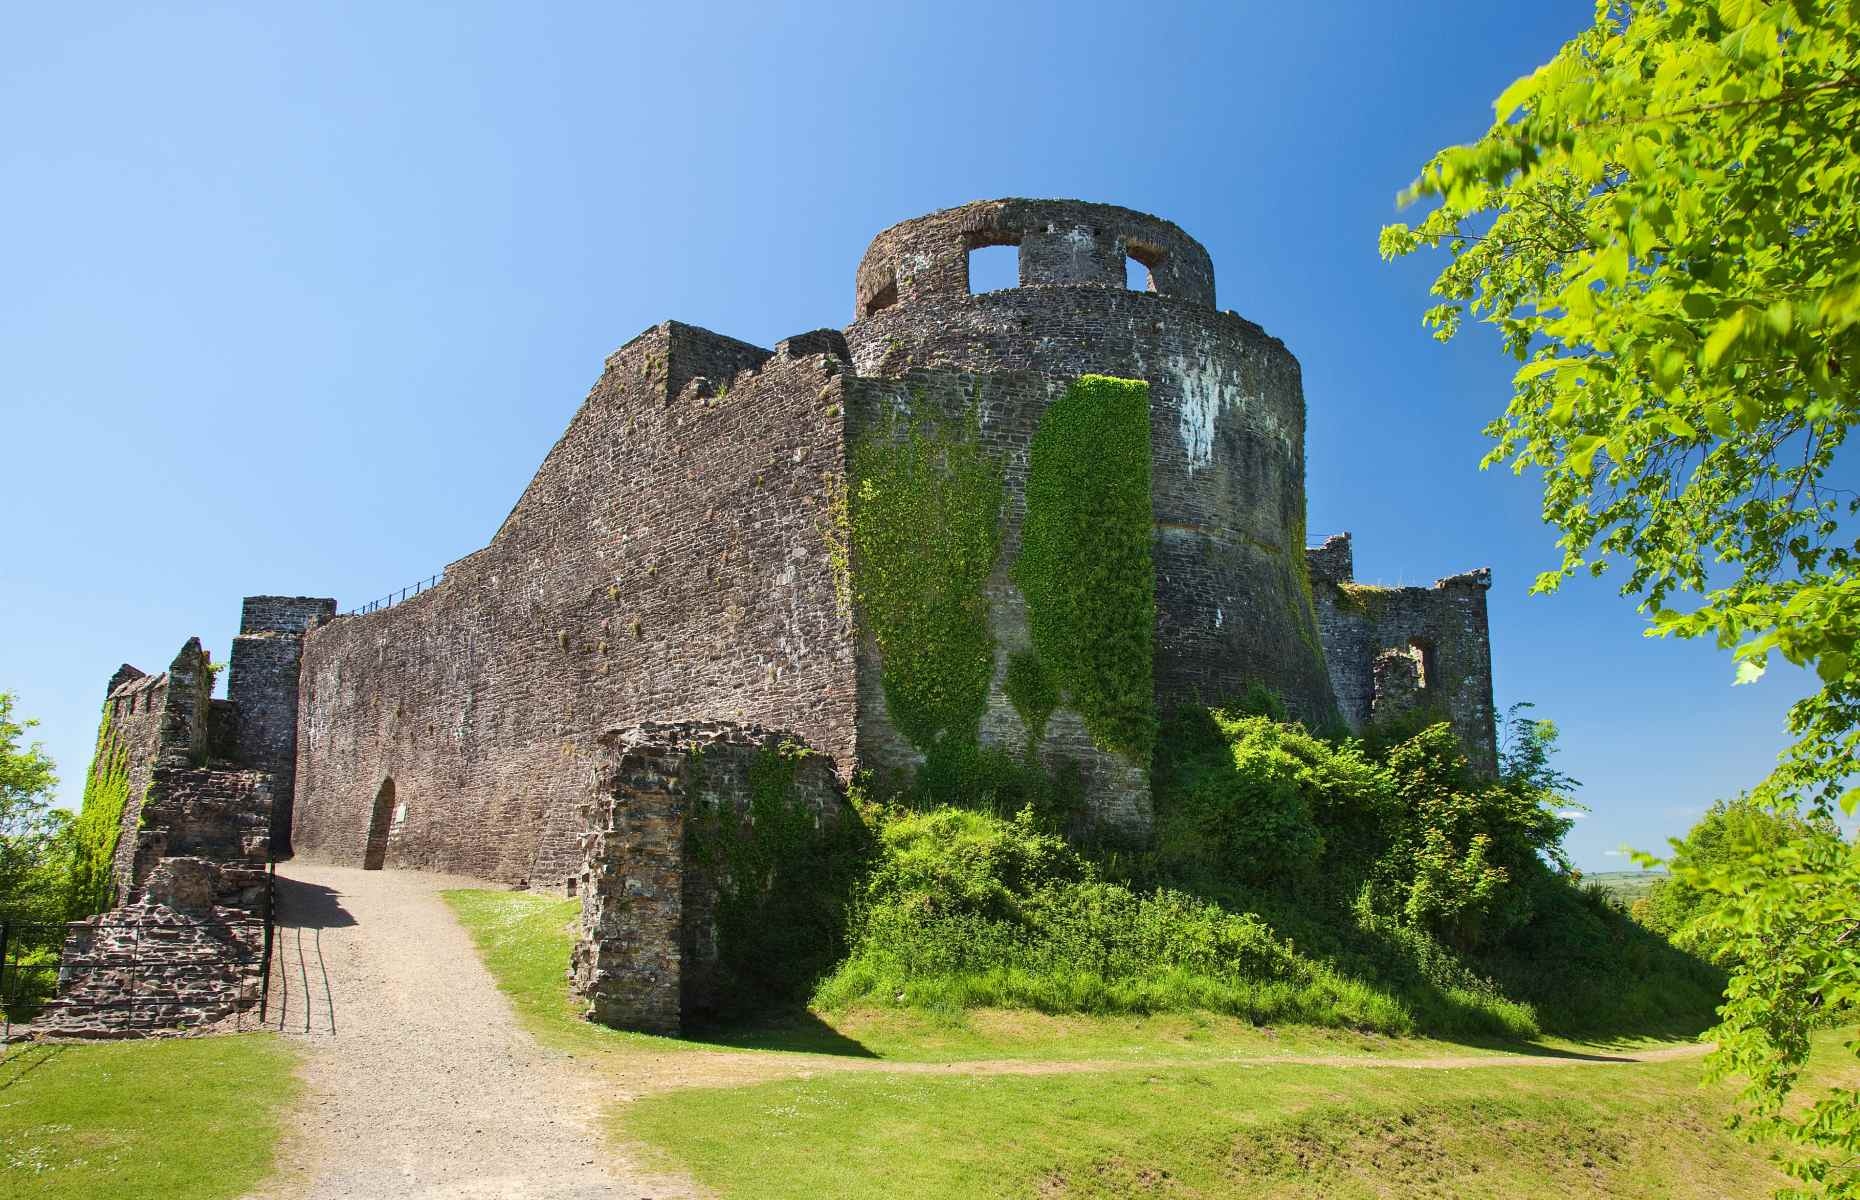 Dinefwr Castle (Image: Shutterstock/Billy Stock)